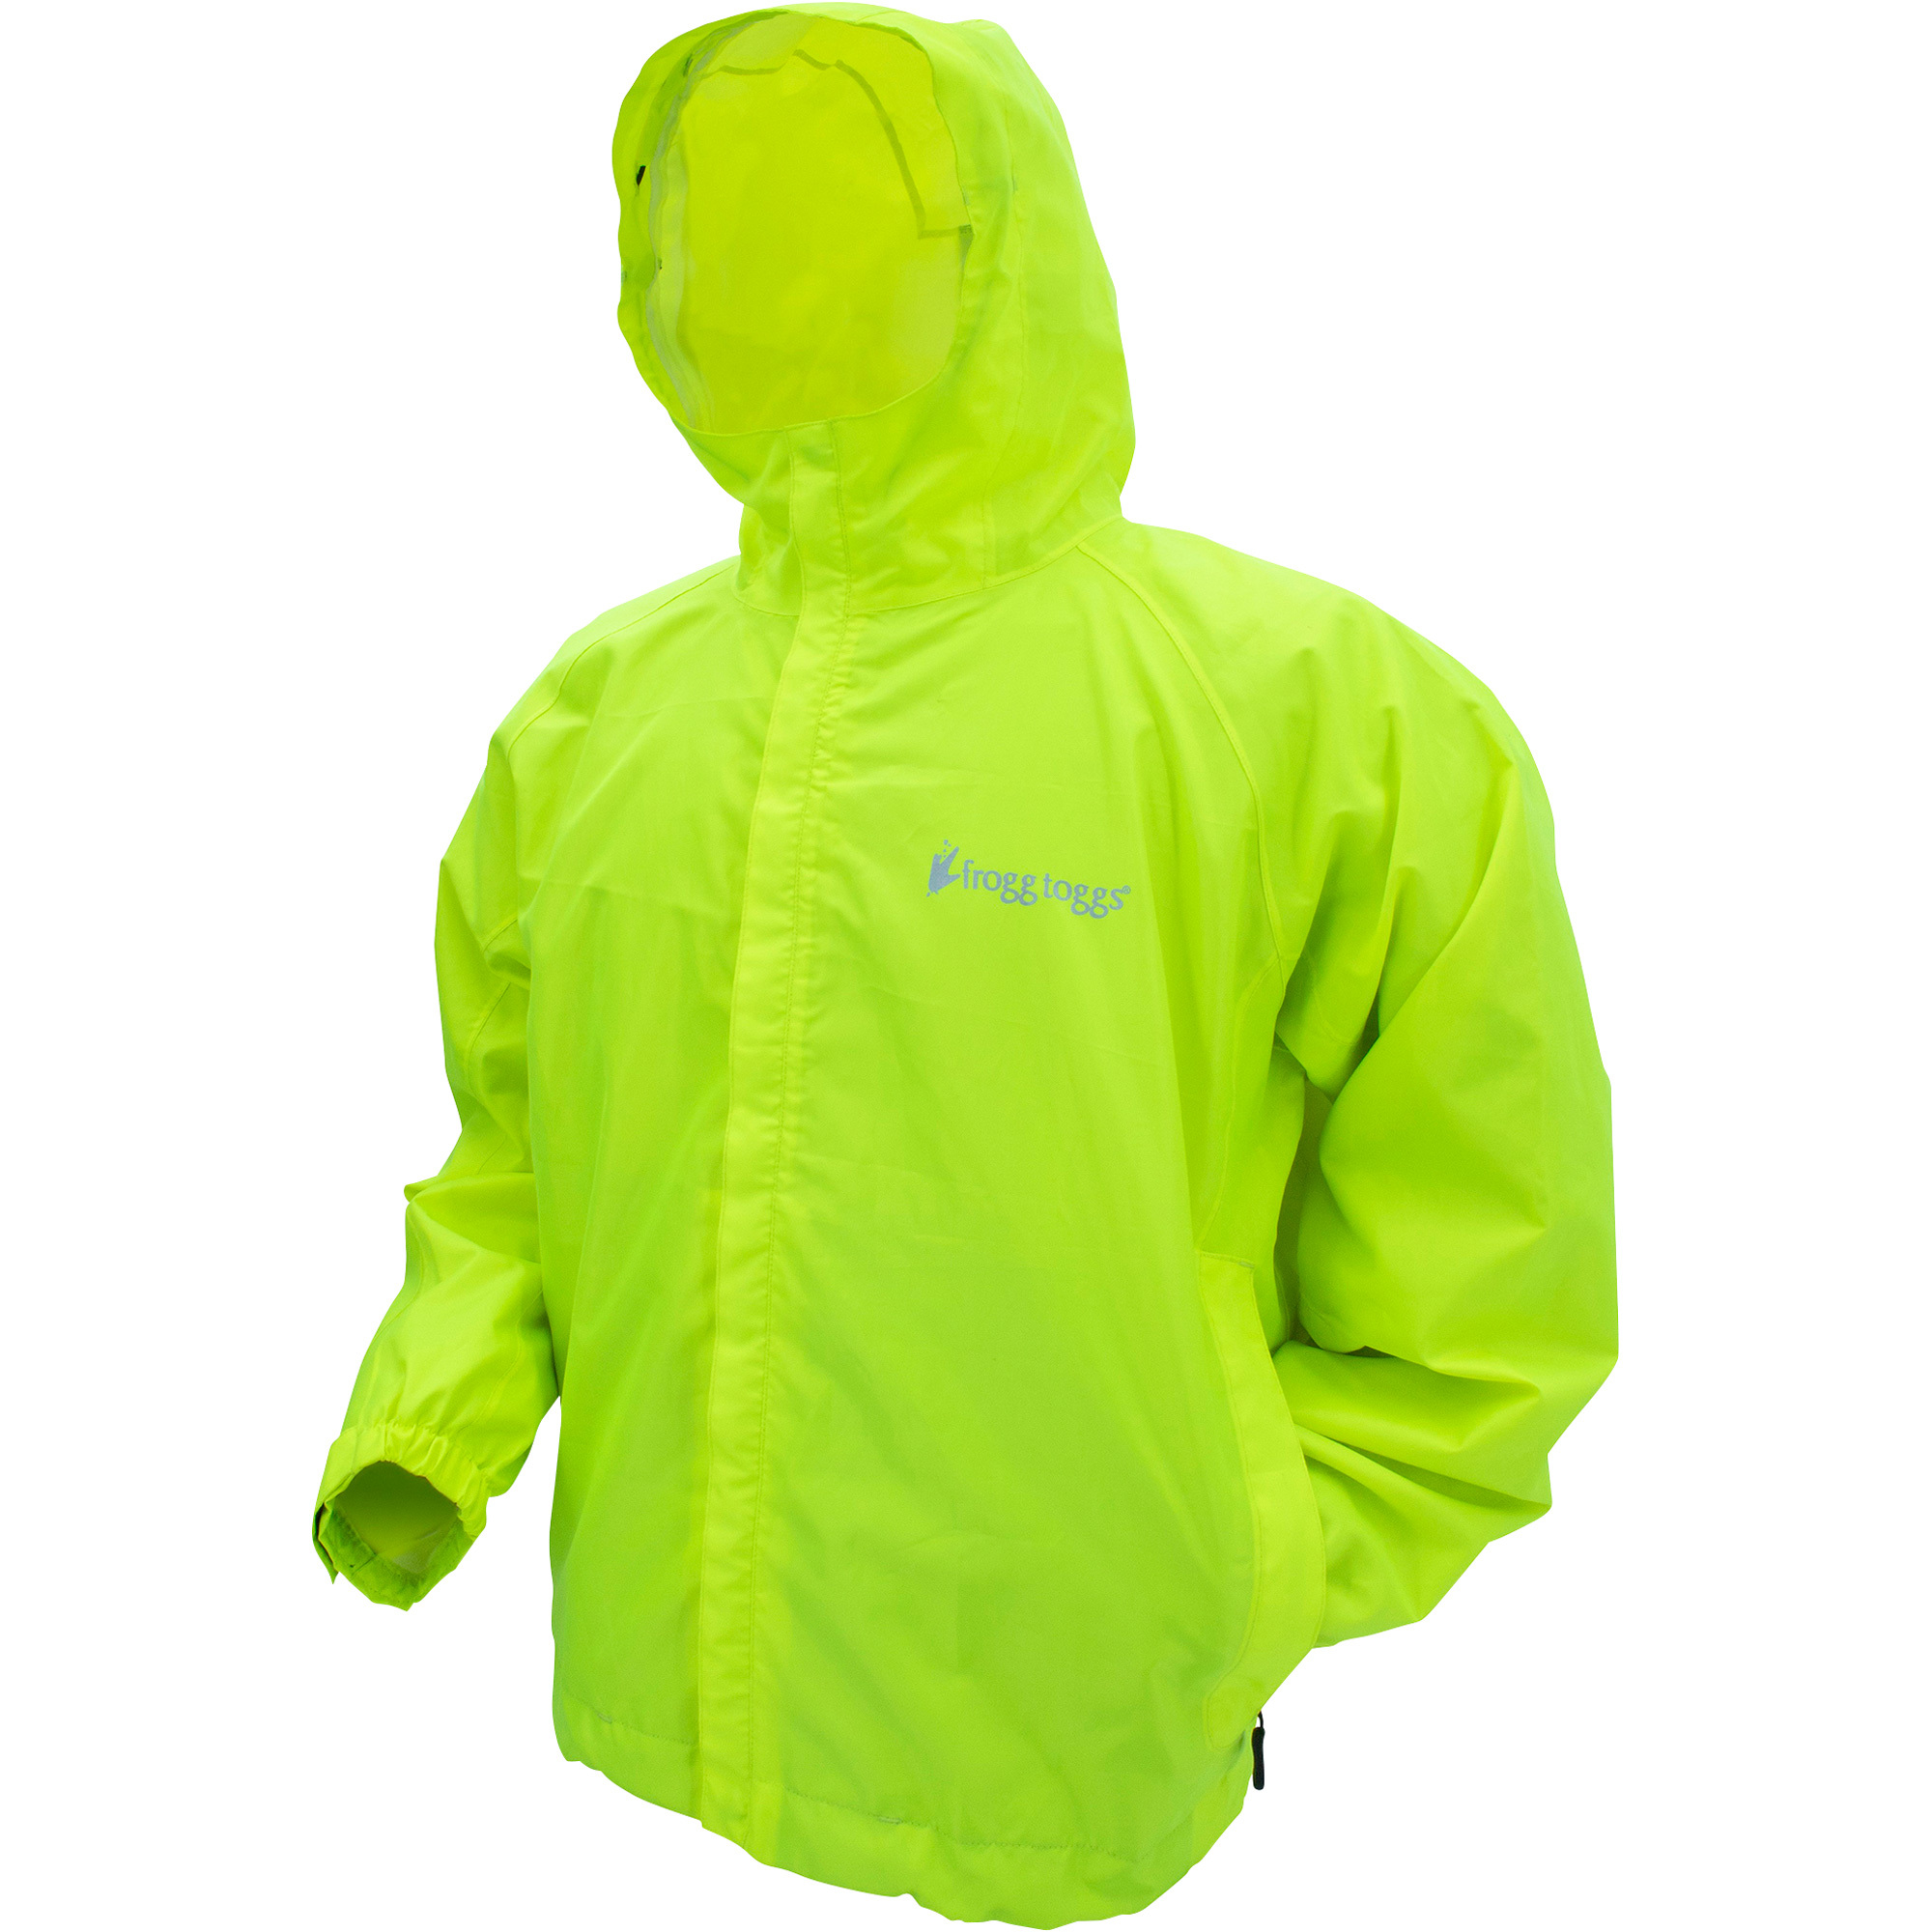 Frogg Toggs Men's Stormwatch Jacket â Lime, Medium, Model SW62123-48MD